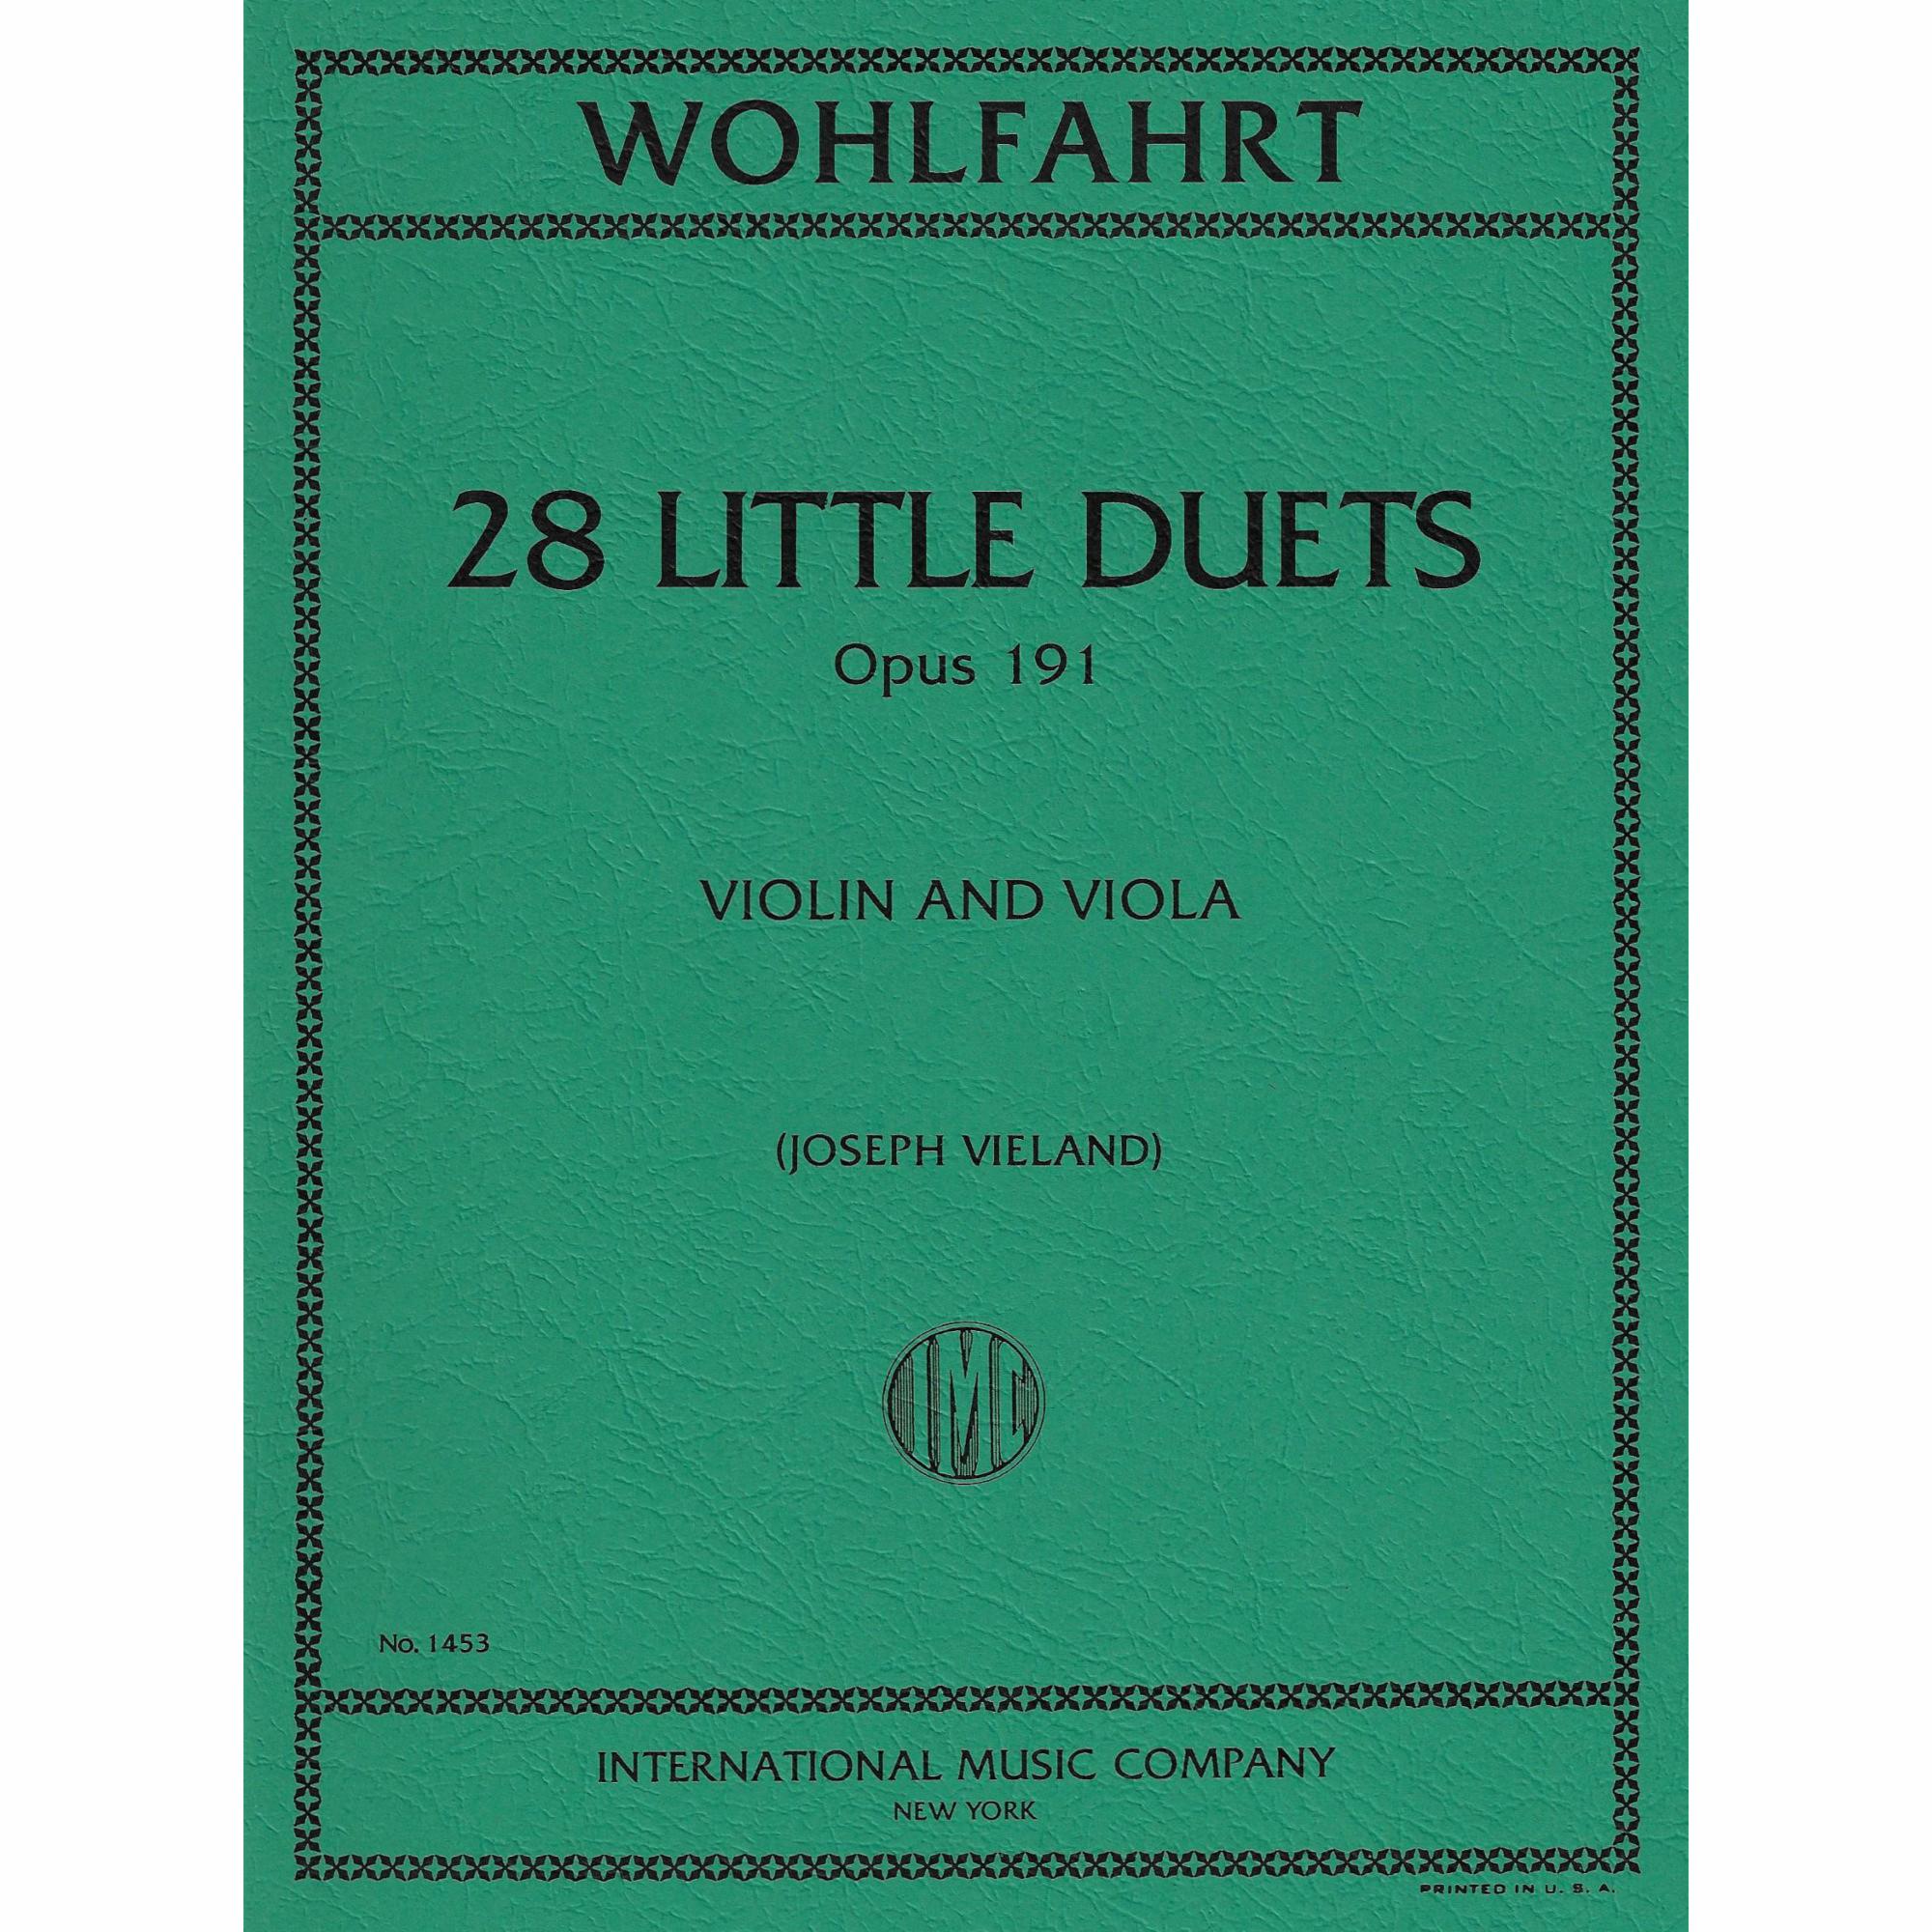 R. Wohlfahrt -- 28 Little Duets, Op. 191 for Violin and Viola